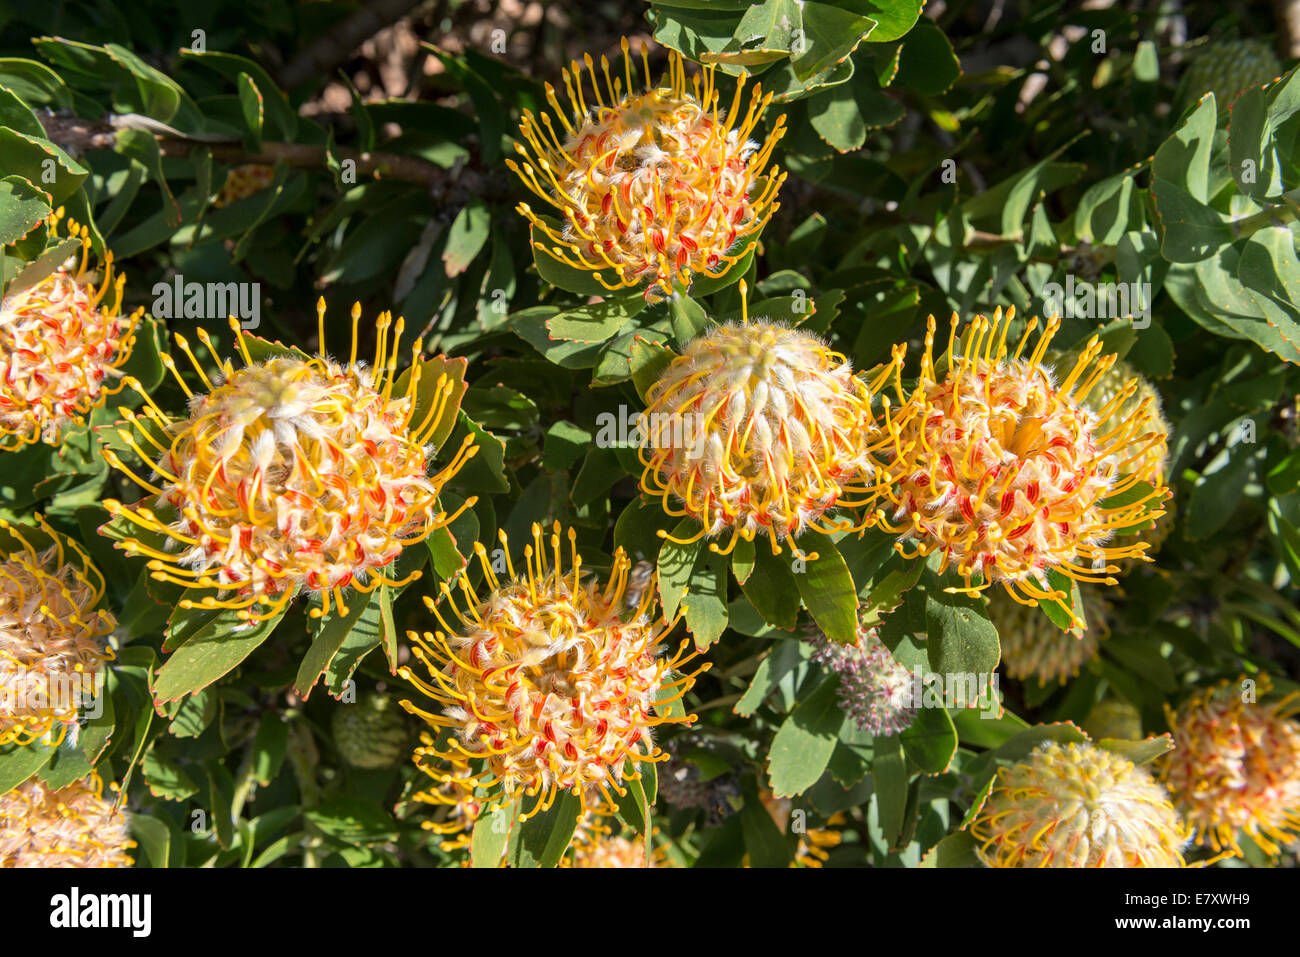 Protea infiorescenze (Leucospermum conocarpodendron x glabrum), cloeseup, Kirstenbosch Botanical Garden, Cape Town, Sud Afric Foto Stock